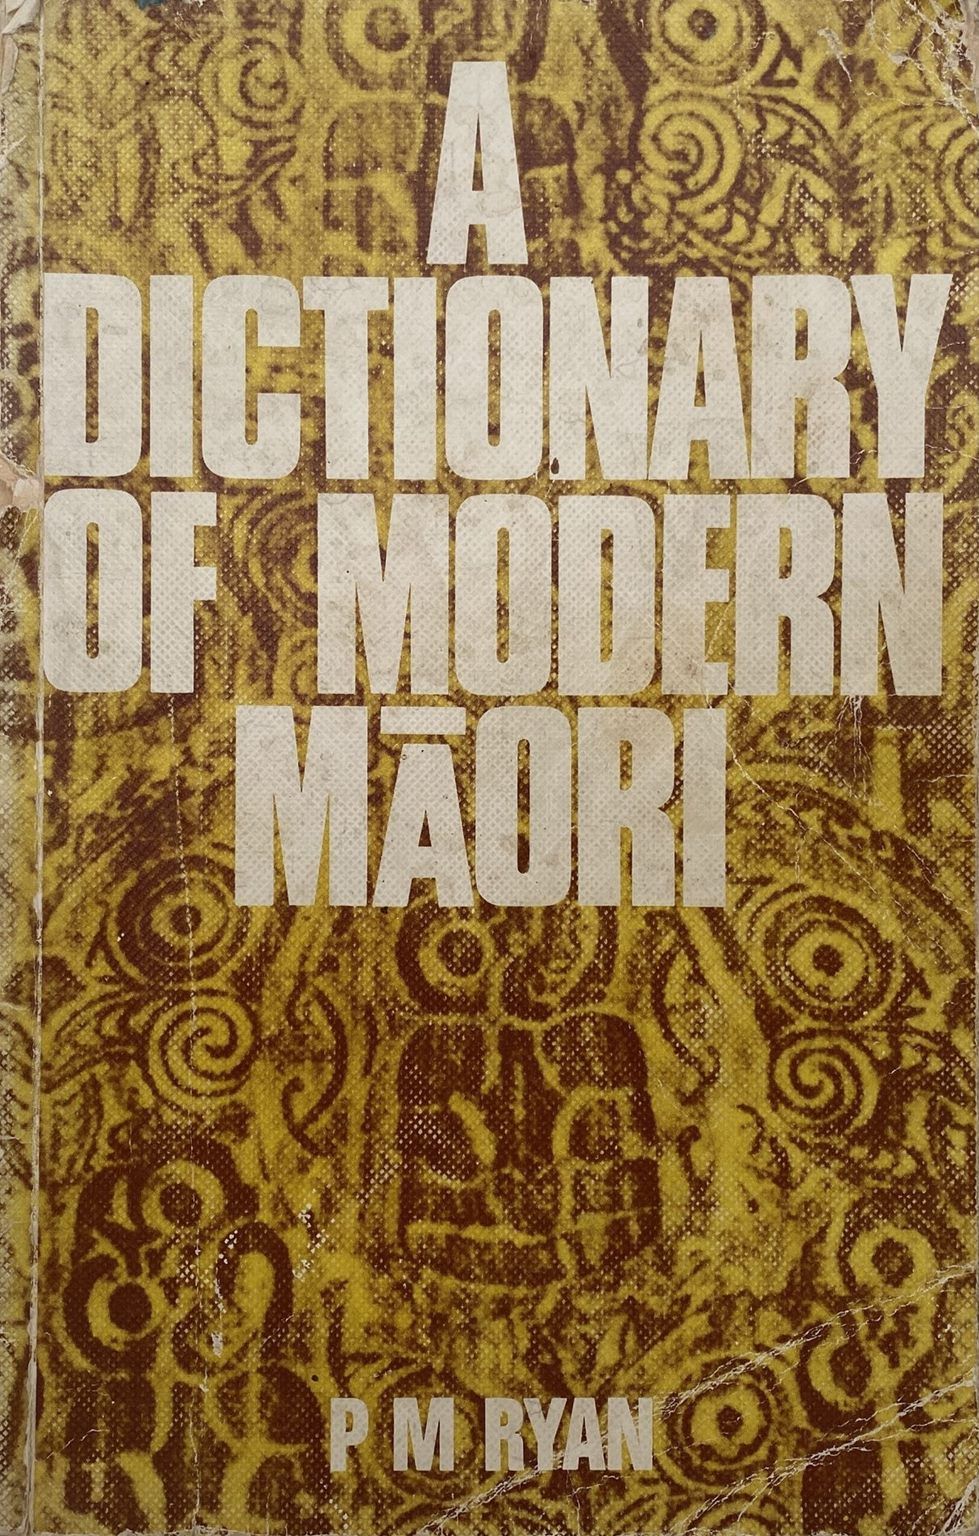 A DICTIONARY OF MODERN MAORI